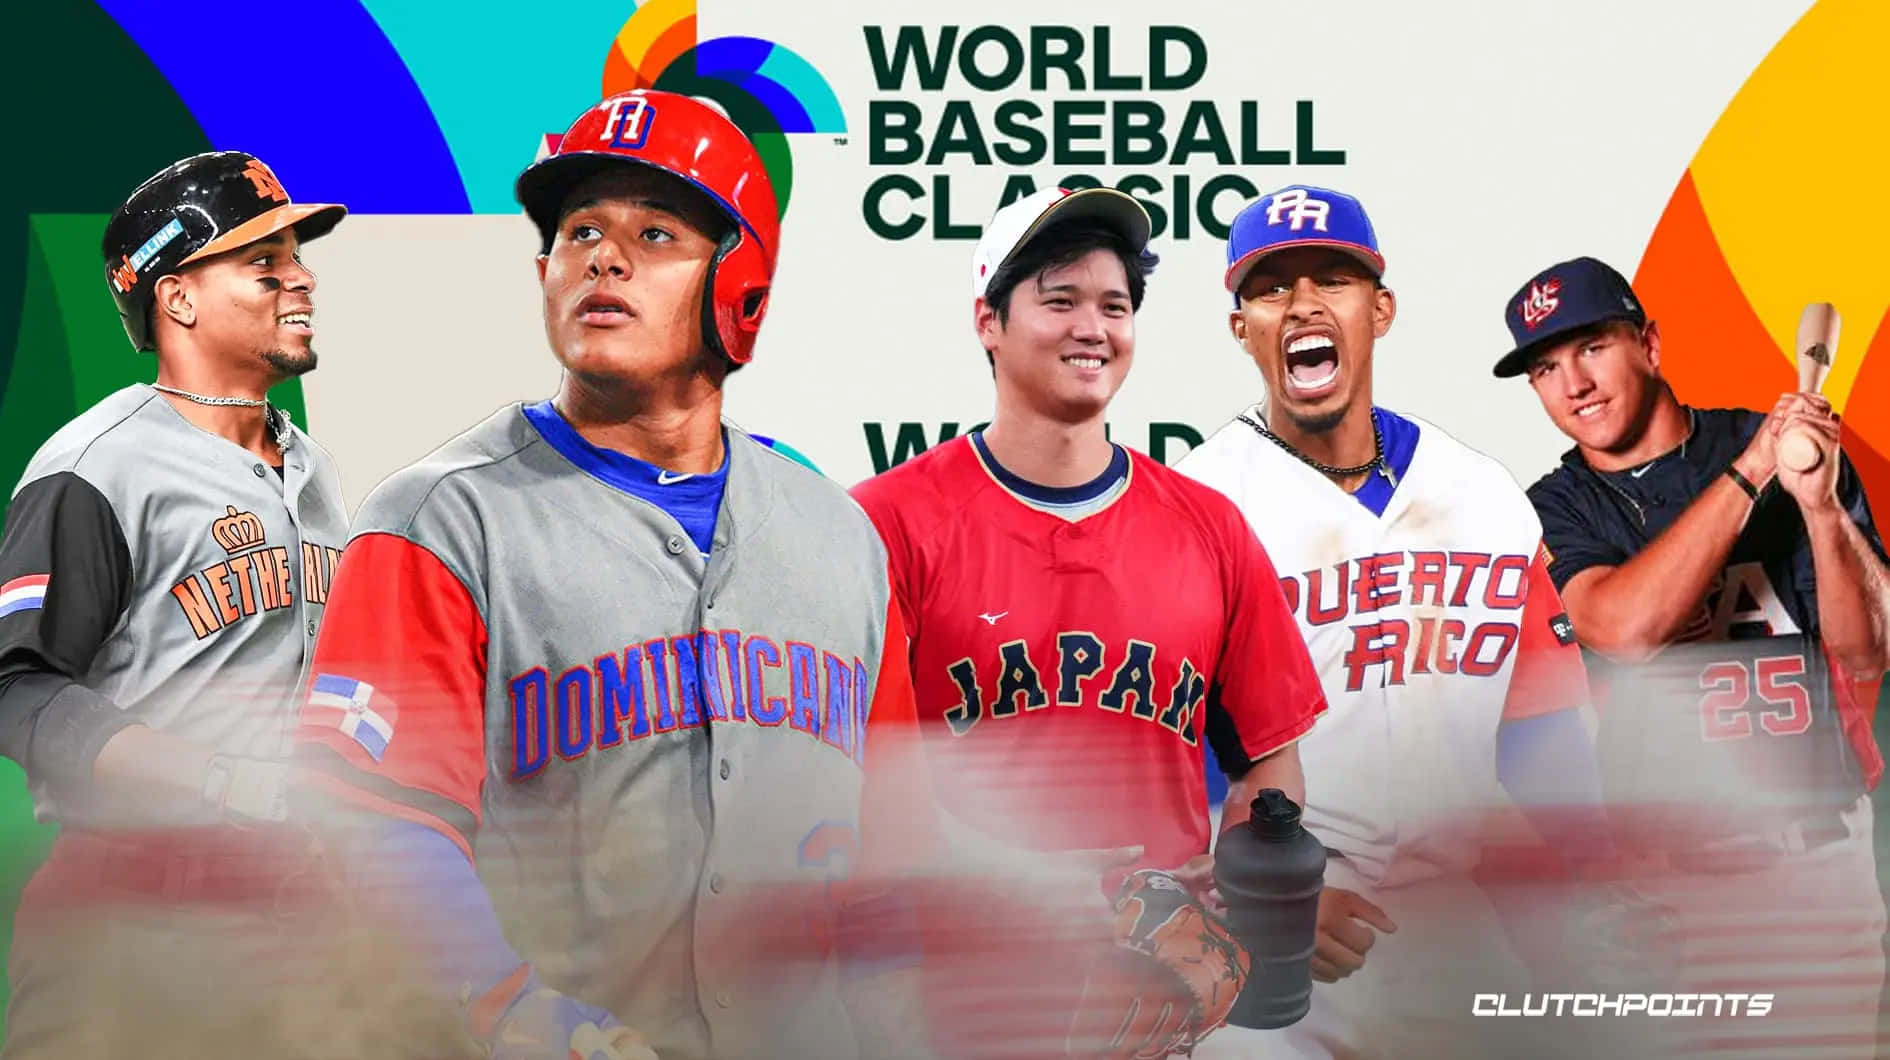 Download World Baseball Classic Wallpaper